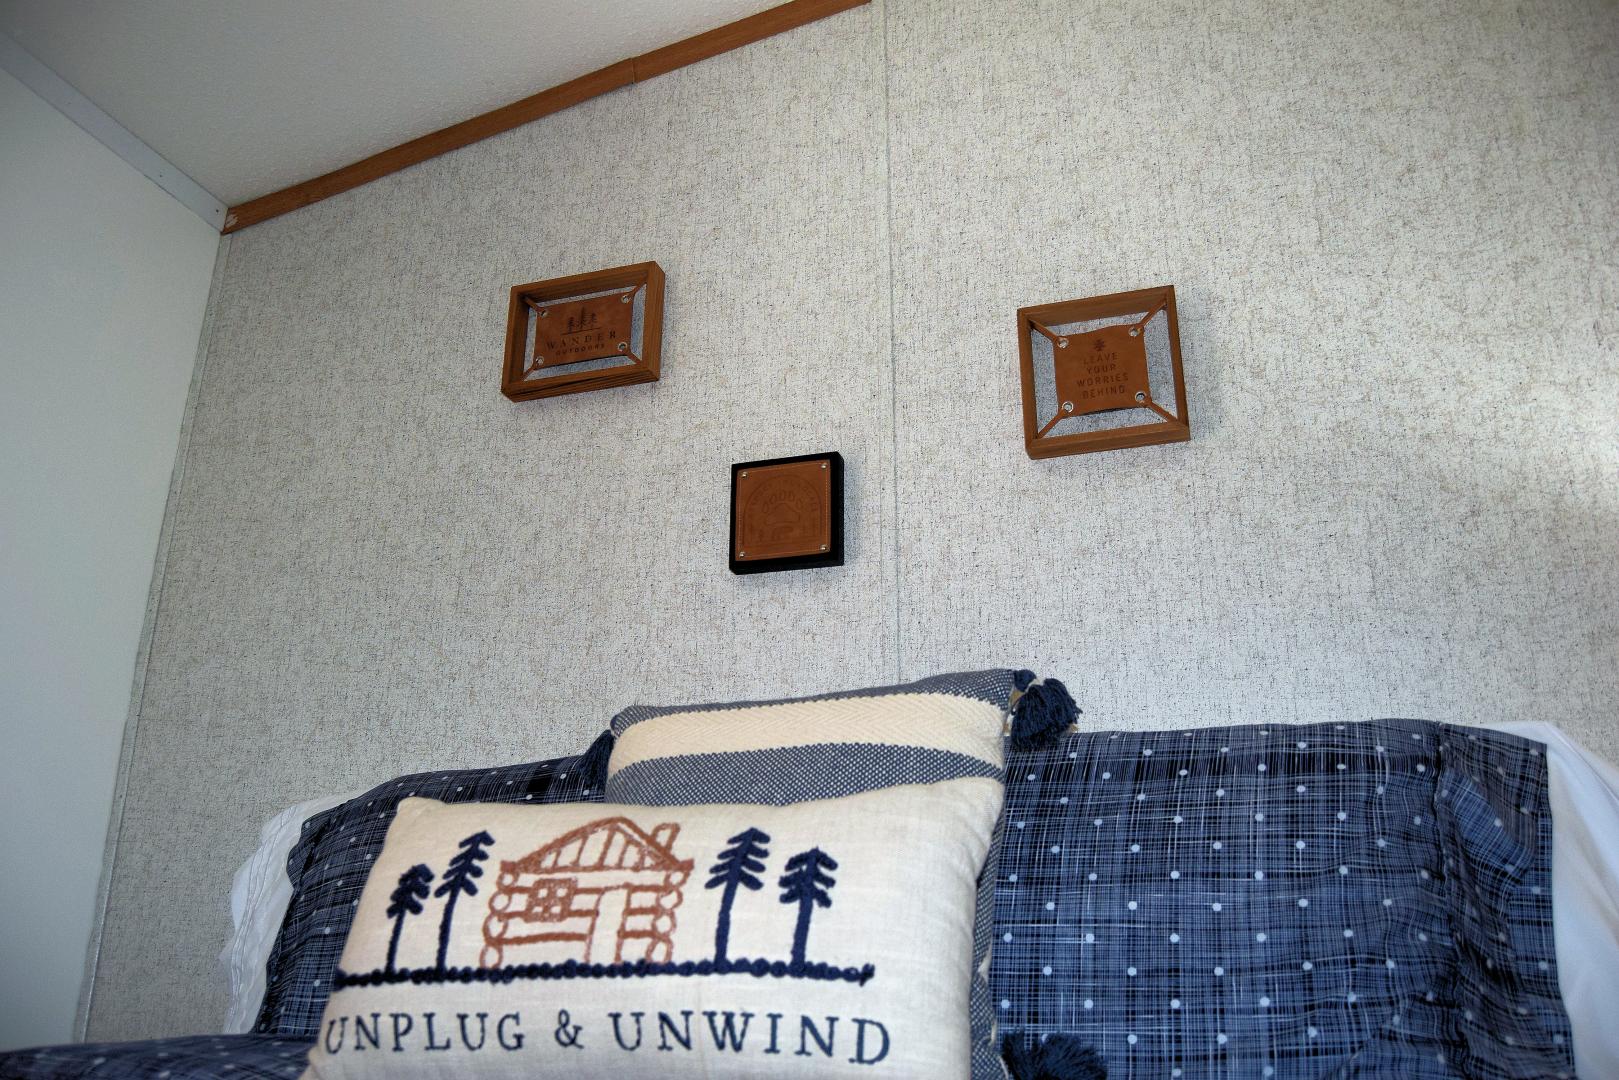 Close up of bedroom pillow saying "Unplug & Unwind"